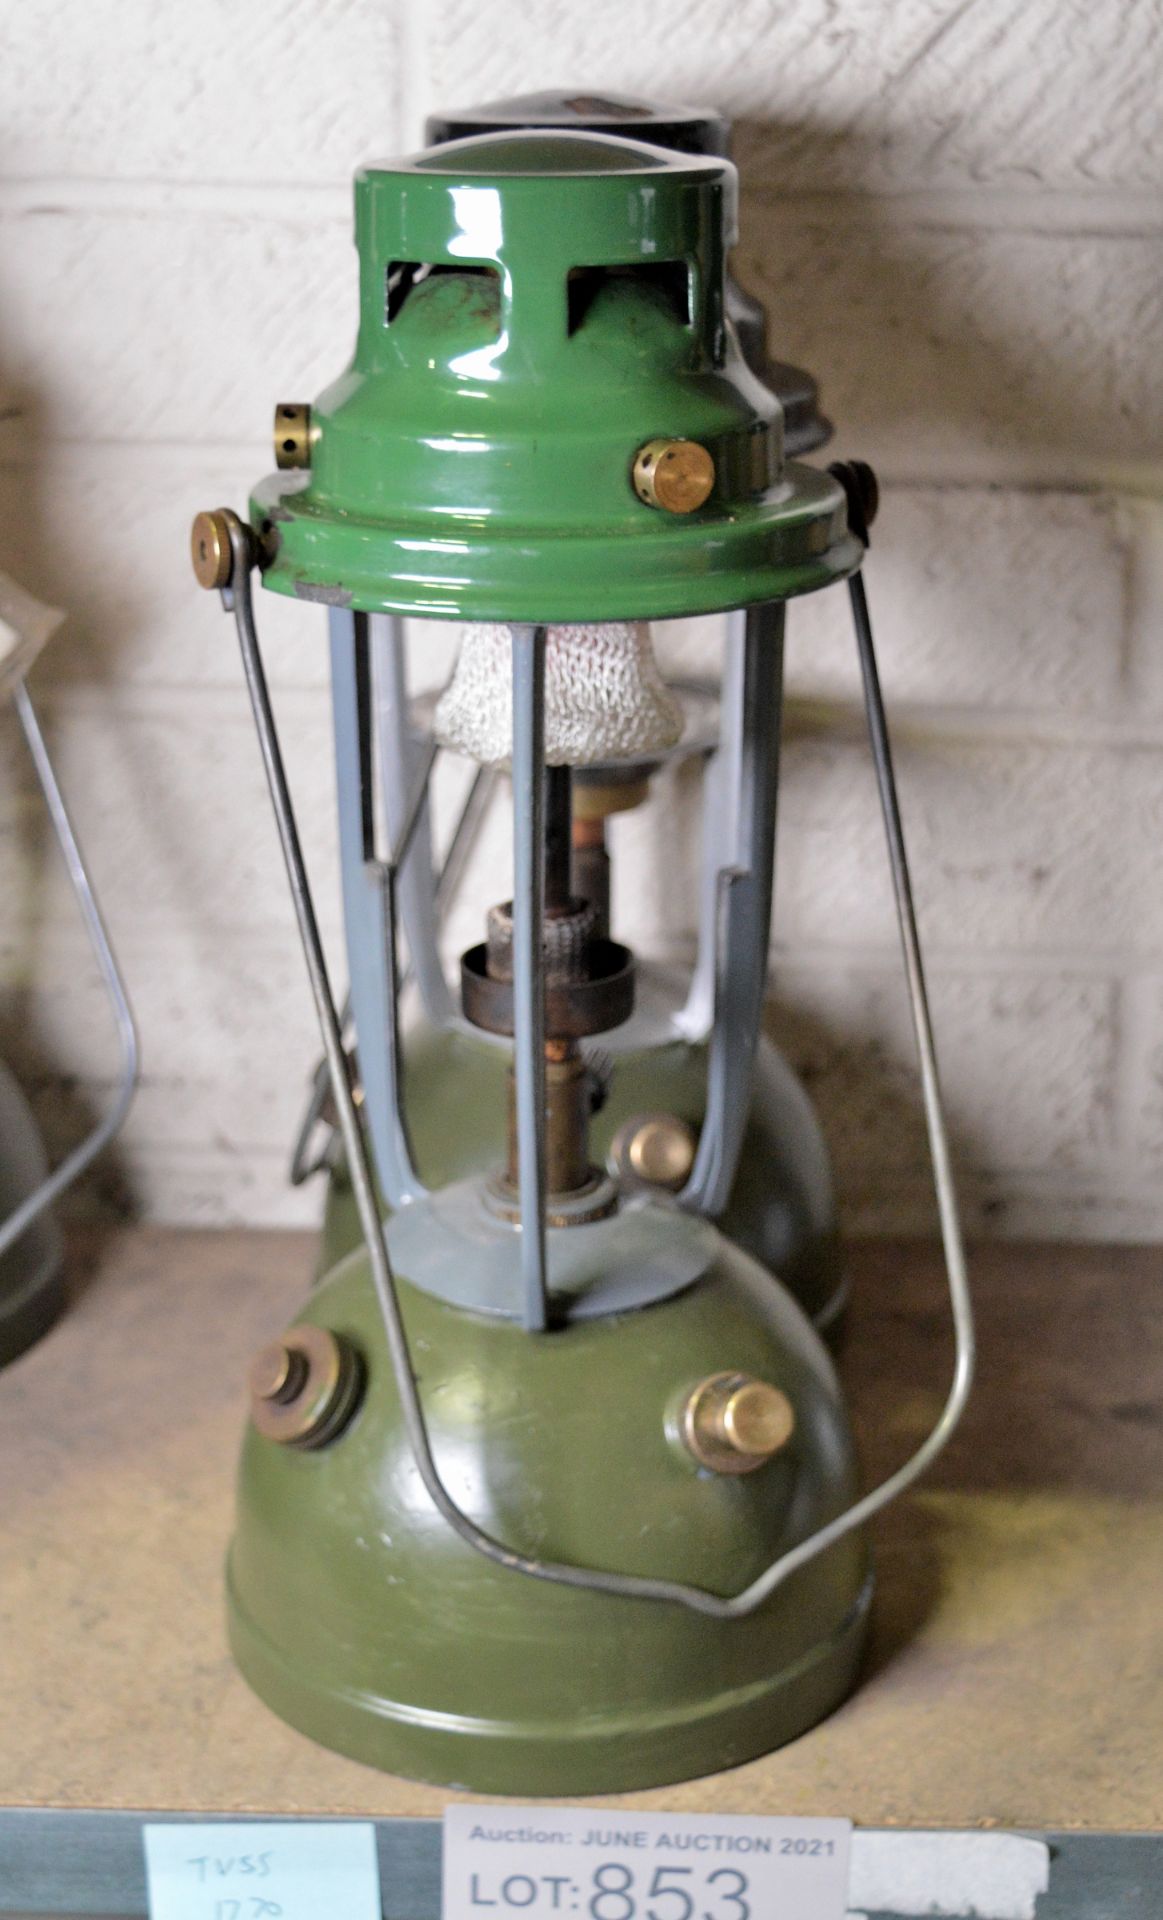 2x Kerosine tilley lamps - 1x green base, black top - 1x green base, green top - Image 2 of 2